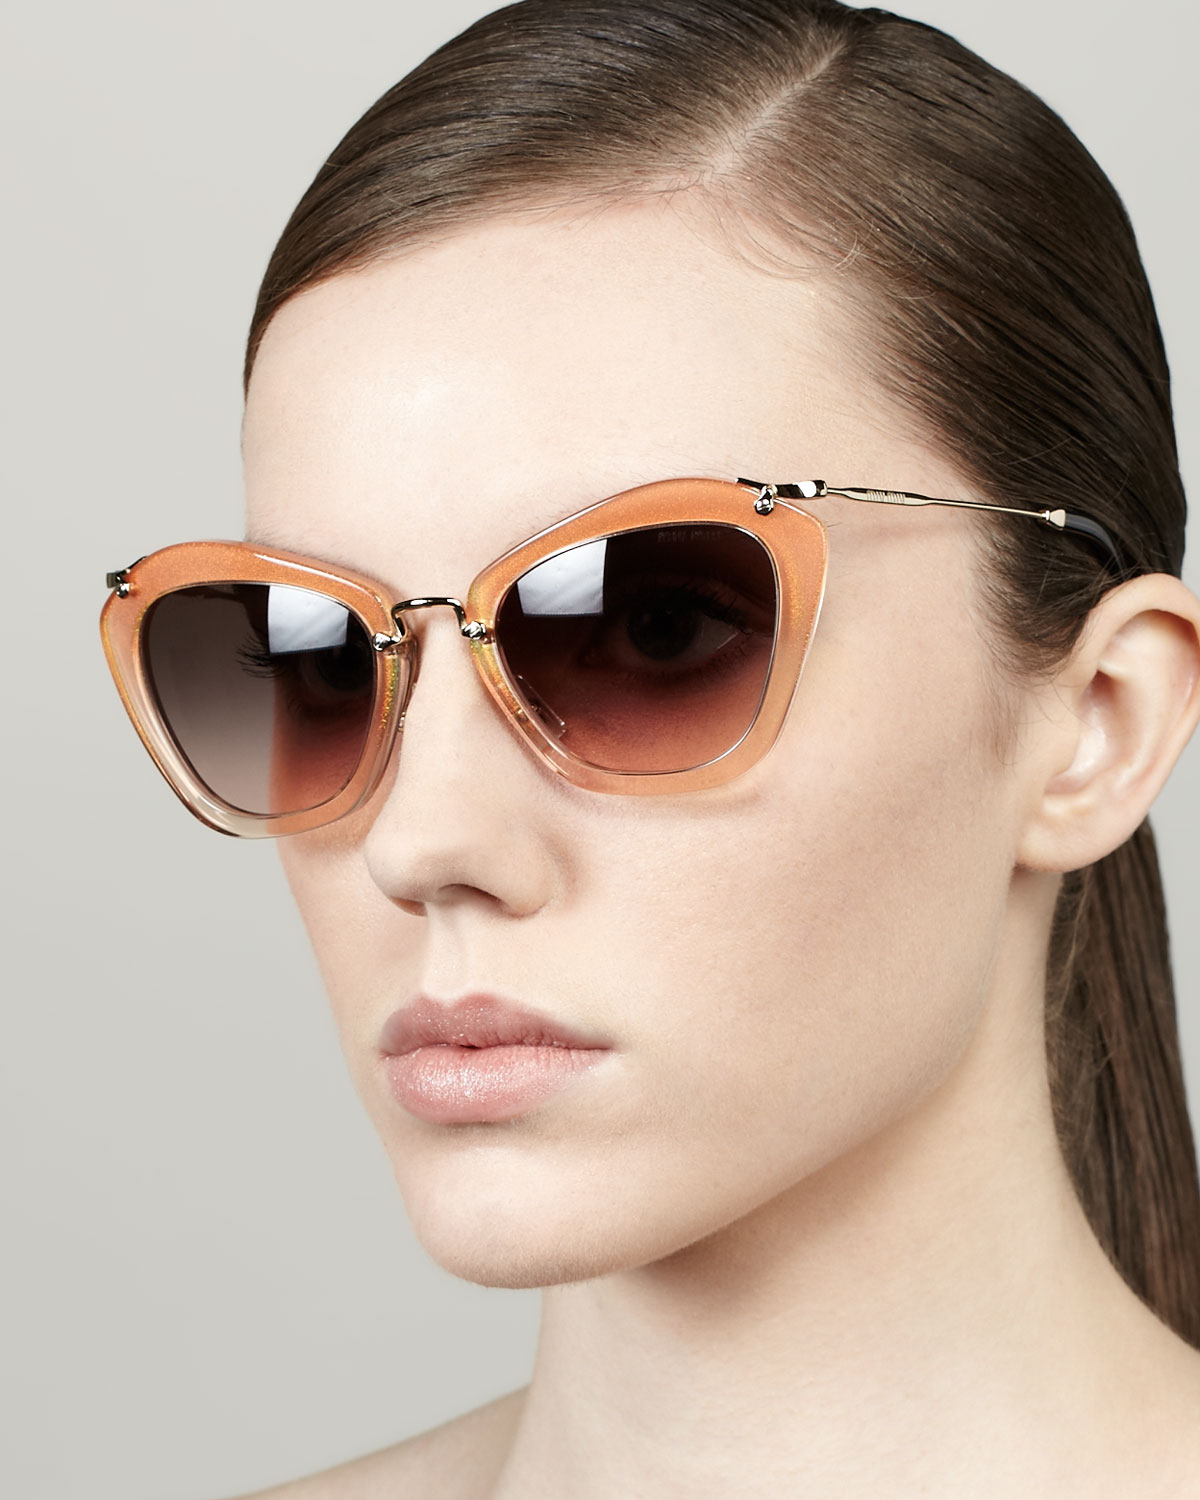 Солнцезащитные очки на лето 2014 года 